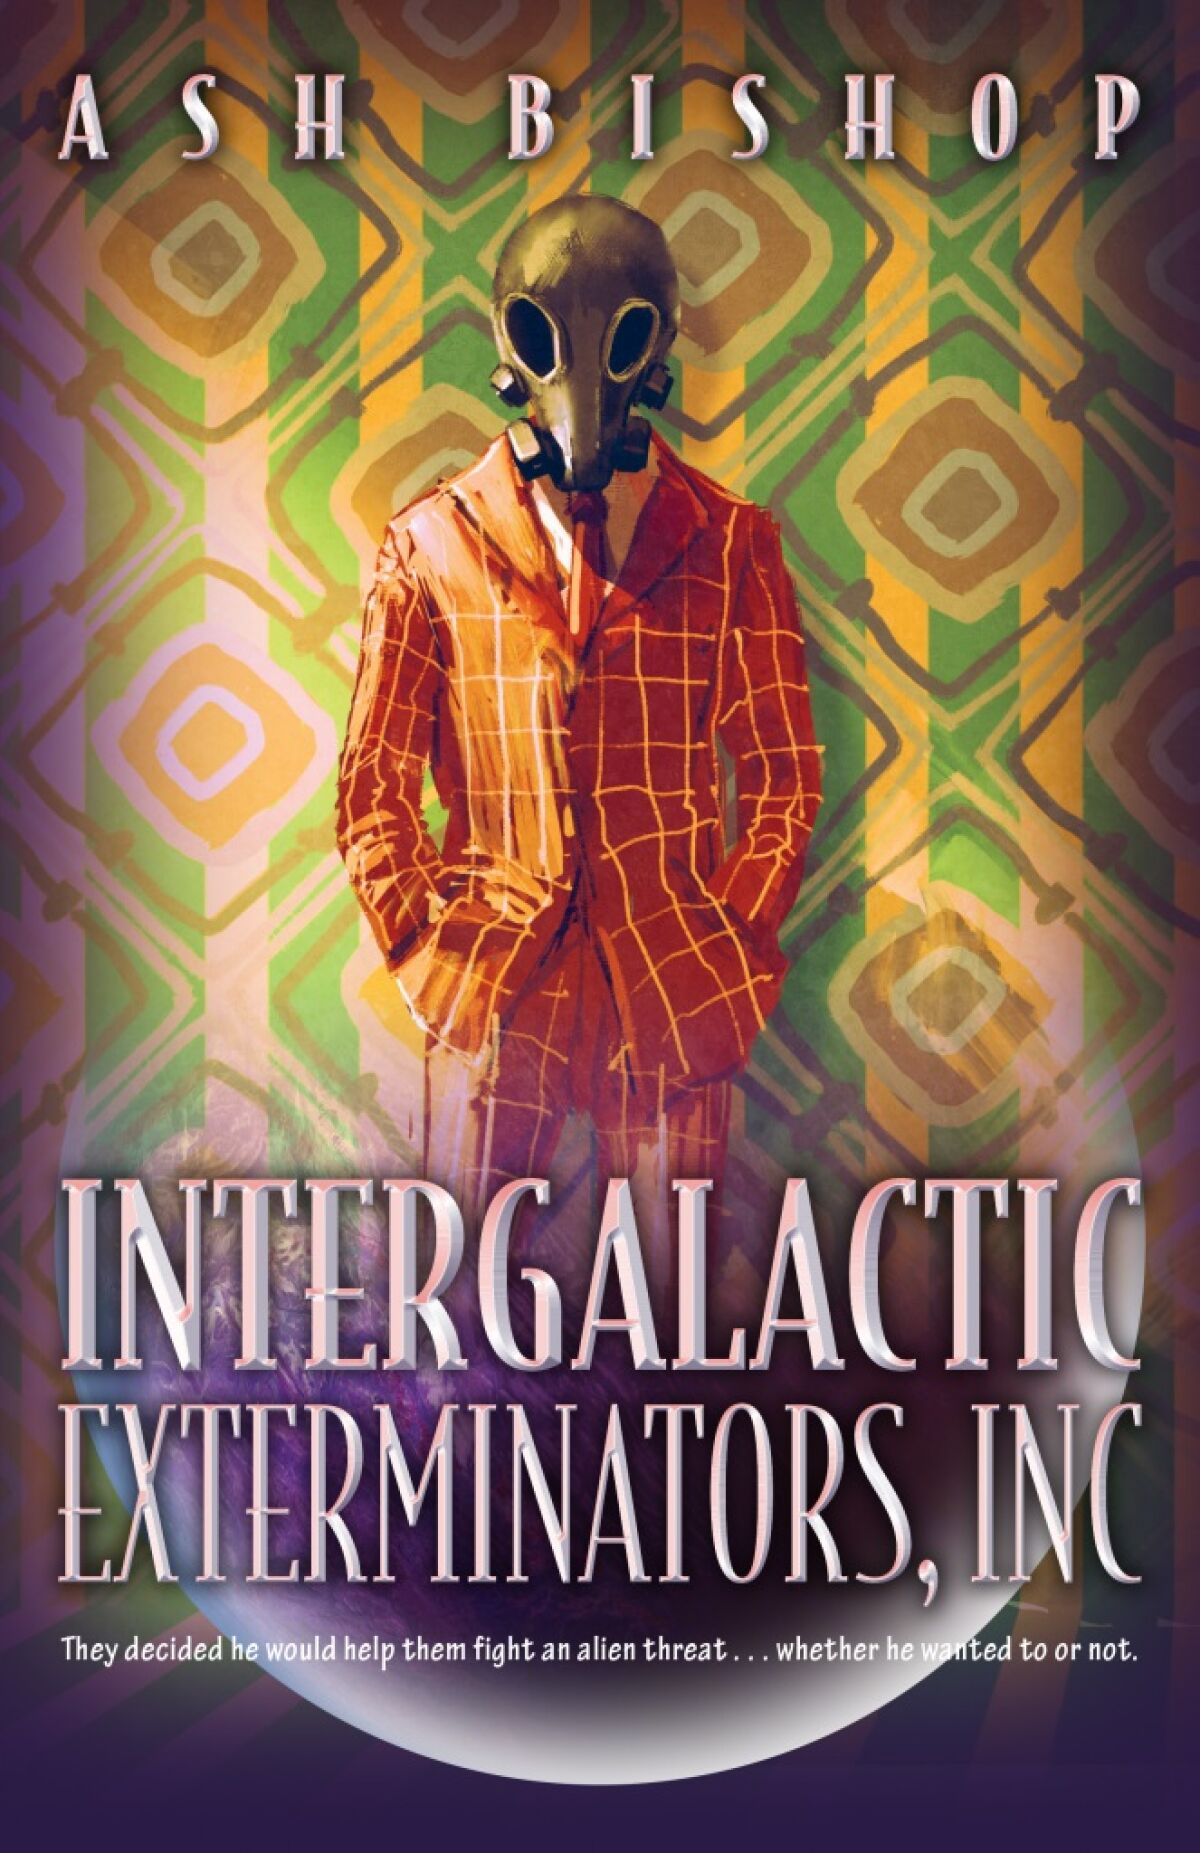 "Intergalactic Exterminators Inc." is the debut novel of area resident Ash Bishop.